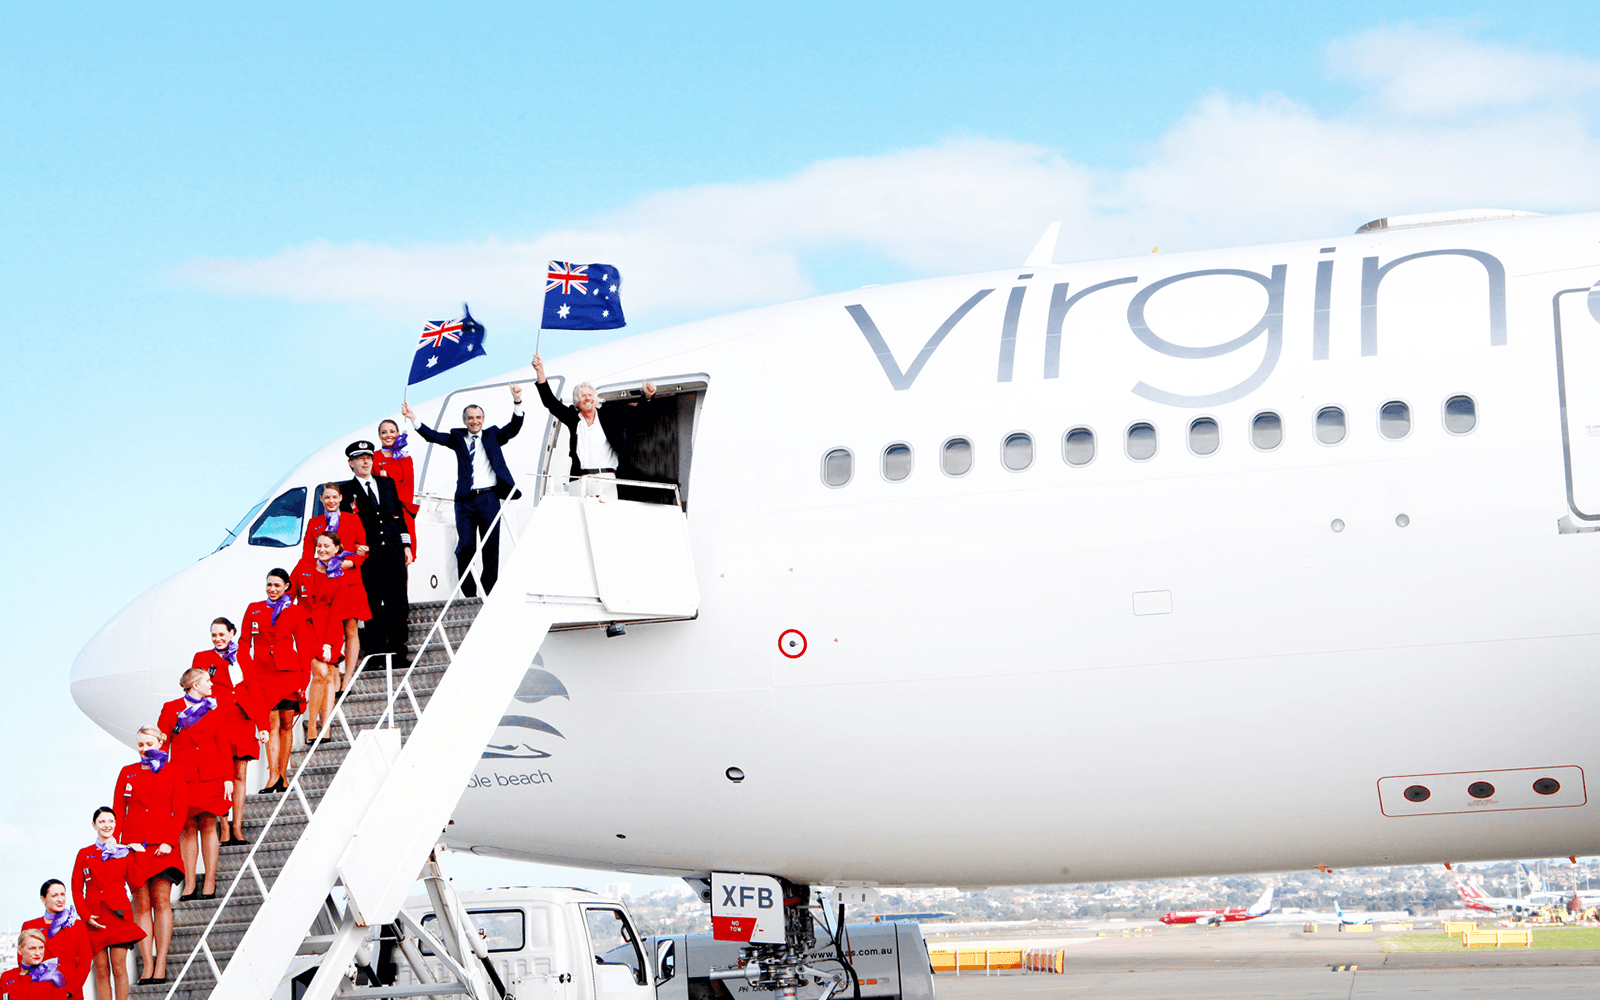 Richard Branson and Virgin Australia employees fly the Australian flag on the steps of a Virgin Australia aeroplane